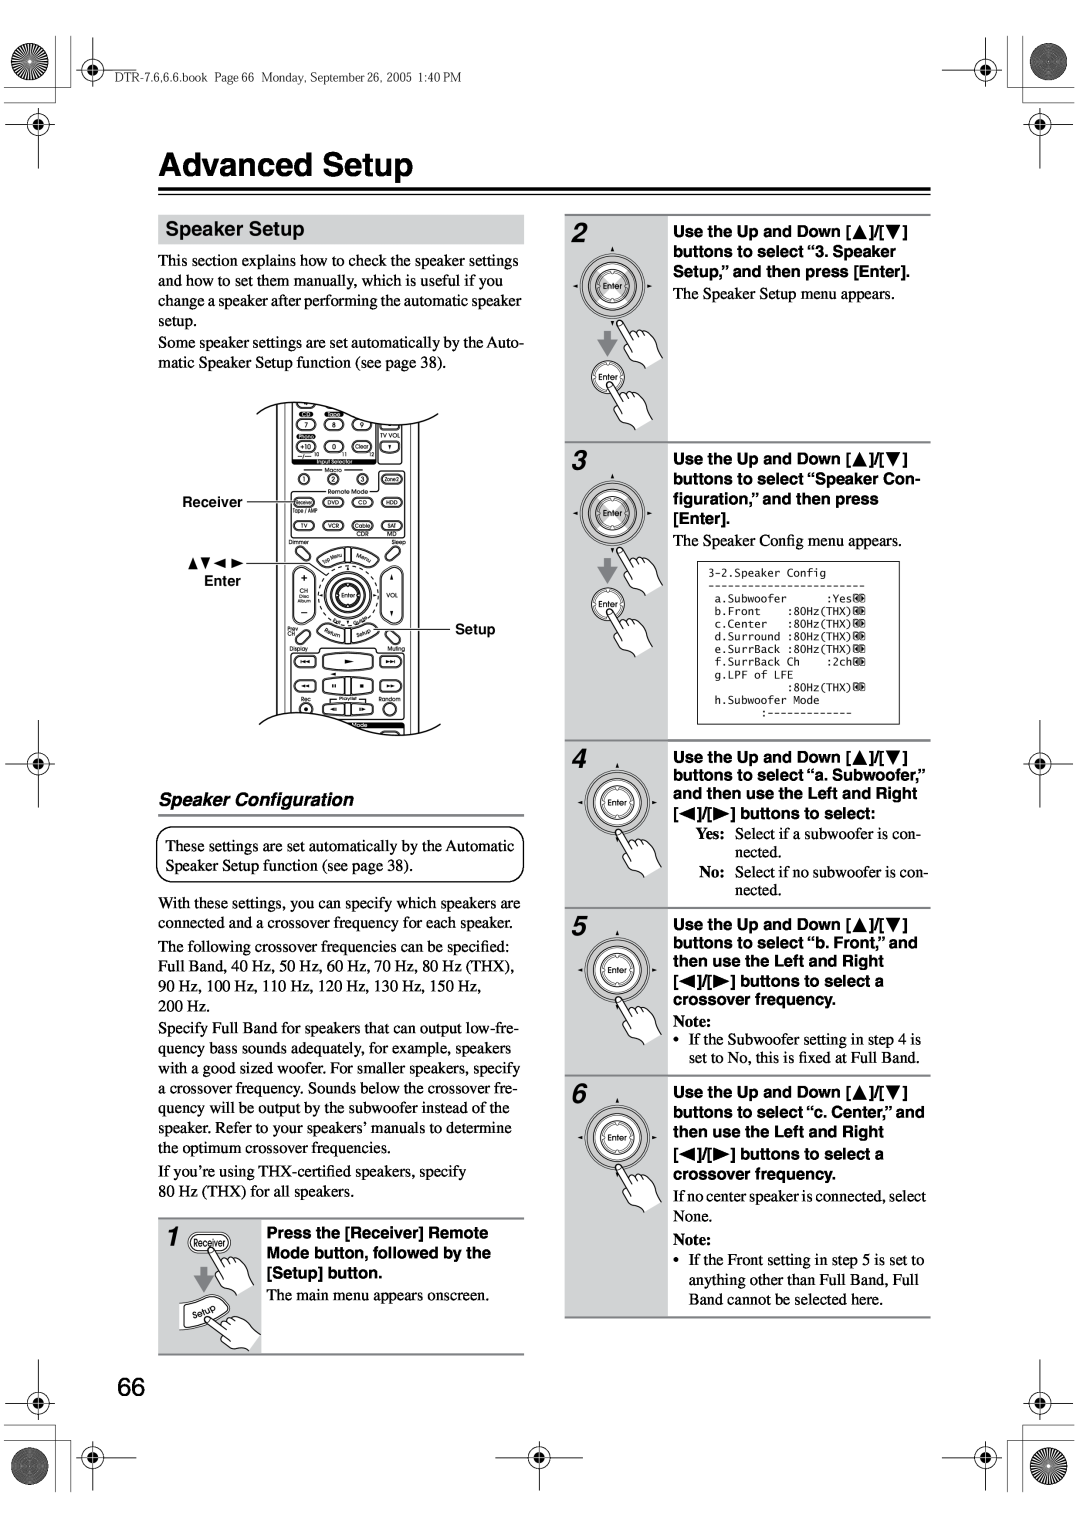 Integra DTR-7.6/6.6 instruction manual Advanced Setup, Speaker Setup, Speaker Conﬁguration 